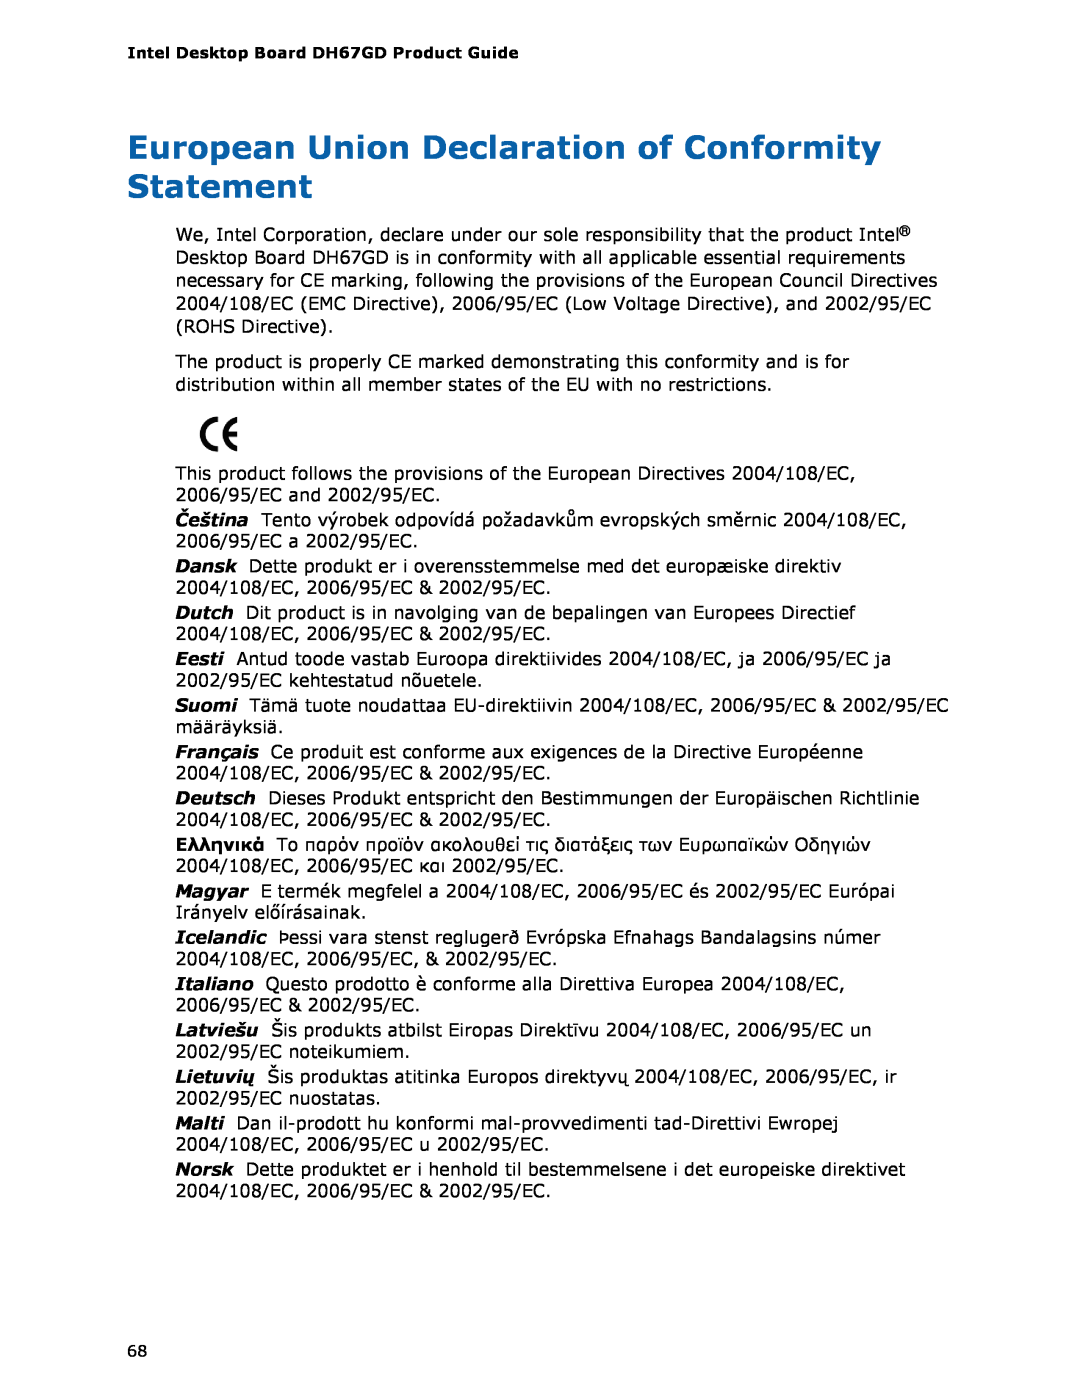 Intel G13841-001, BLKDH67GDB3 manual European Union Declaration of Conformity Statement 